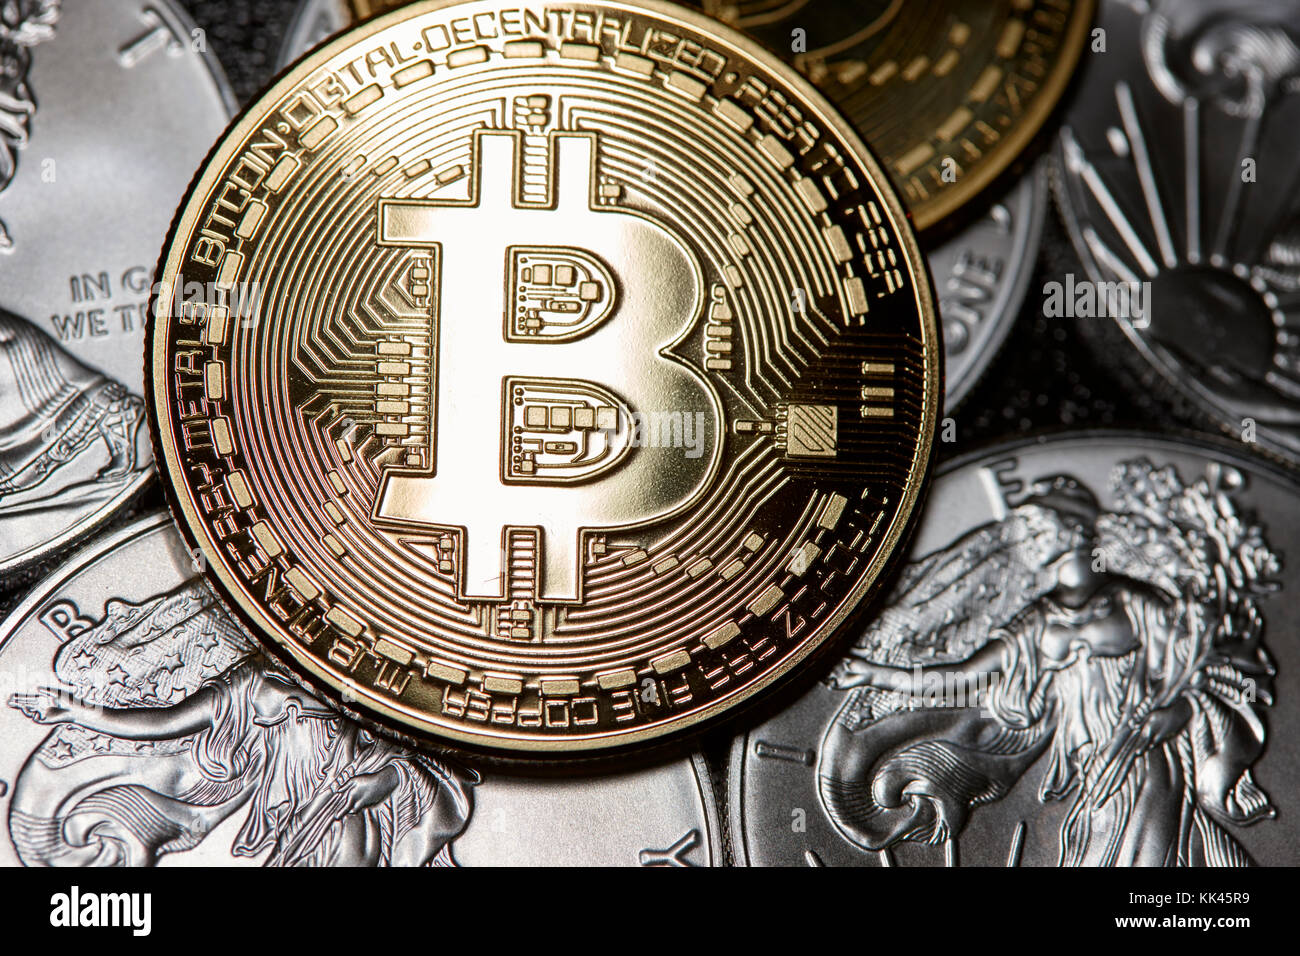 bitcoin with 10z us silver eagle coins Stock Photo